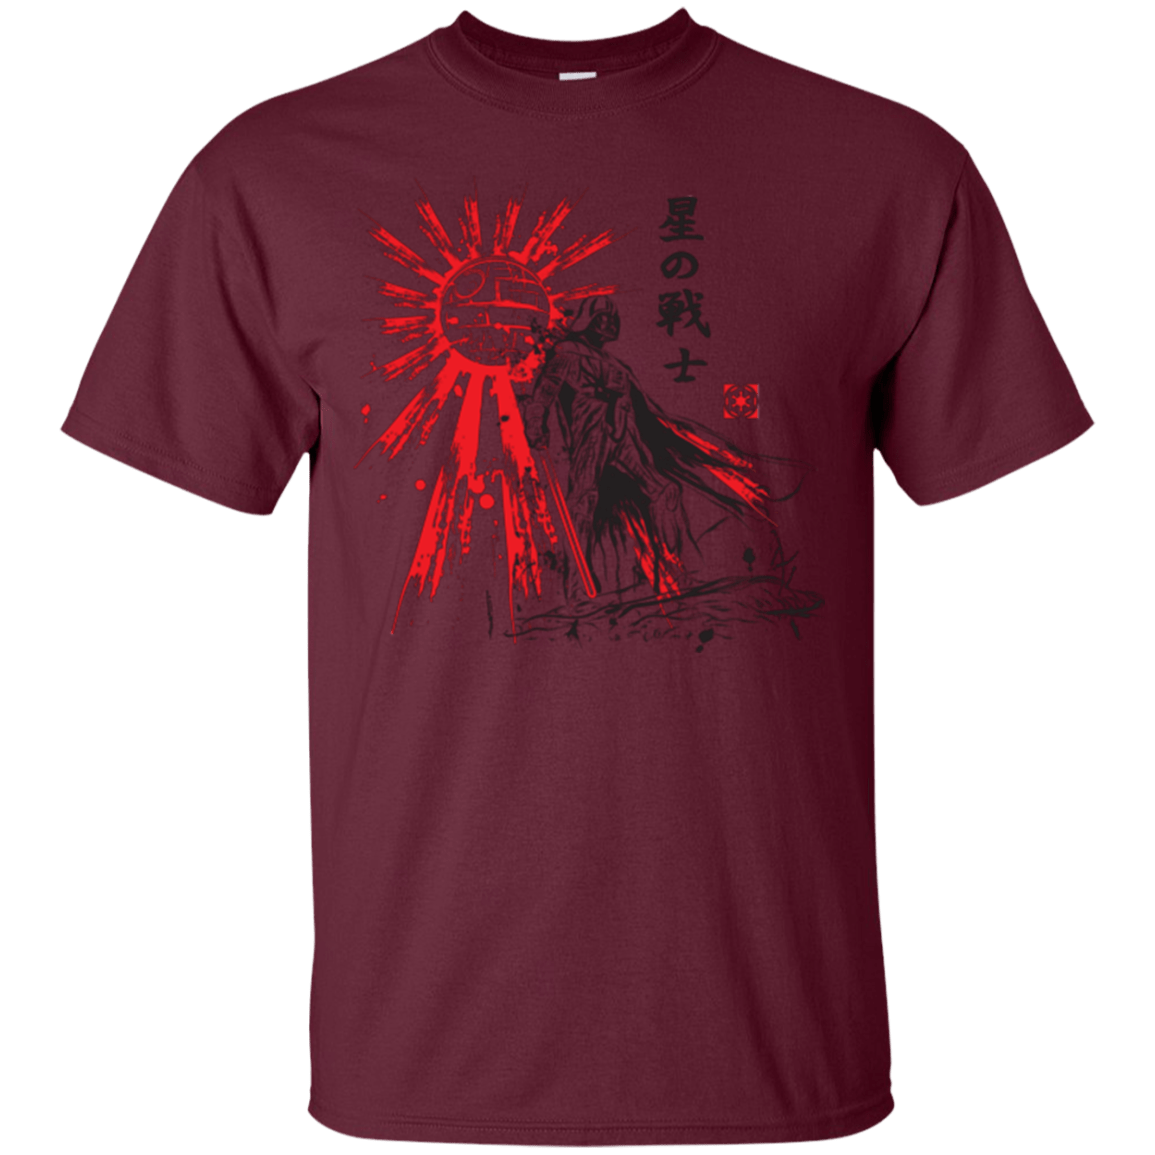 The Star Warrior T-Shirt